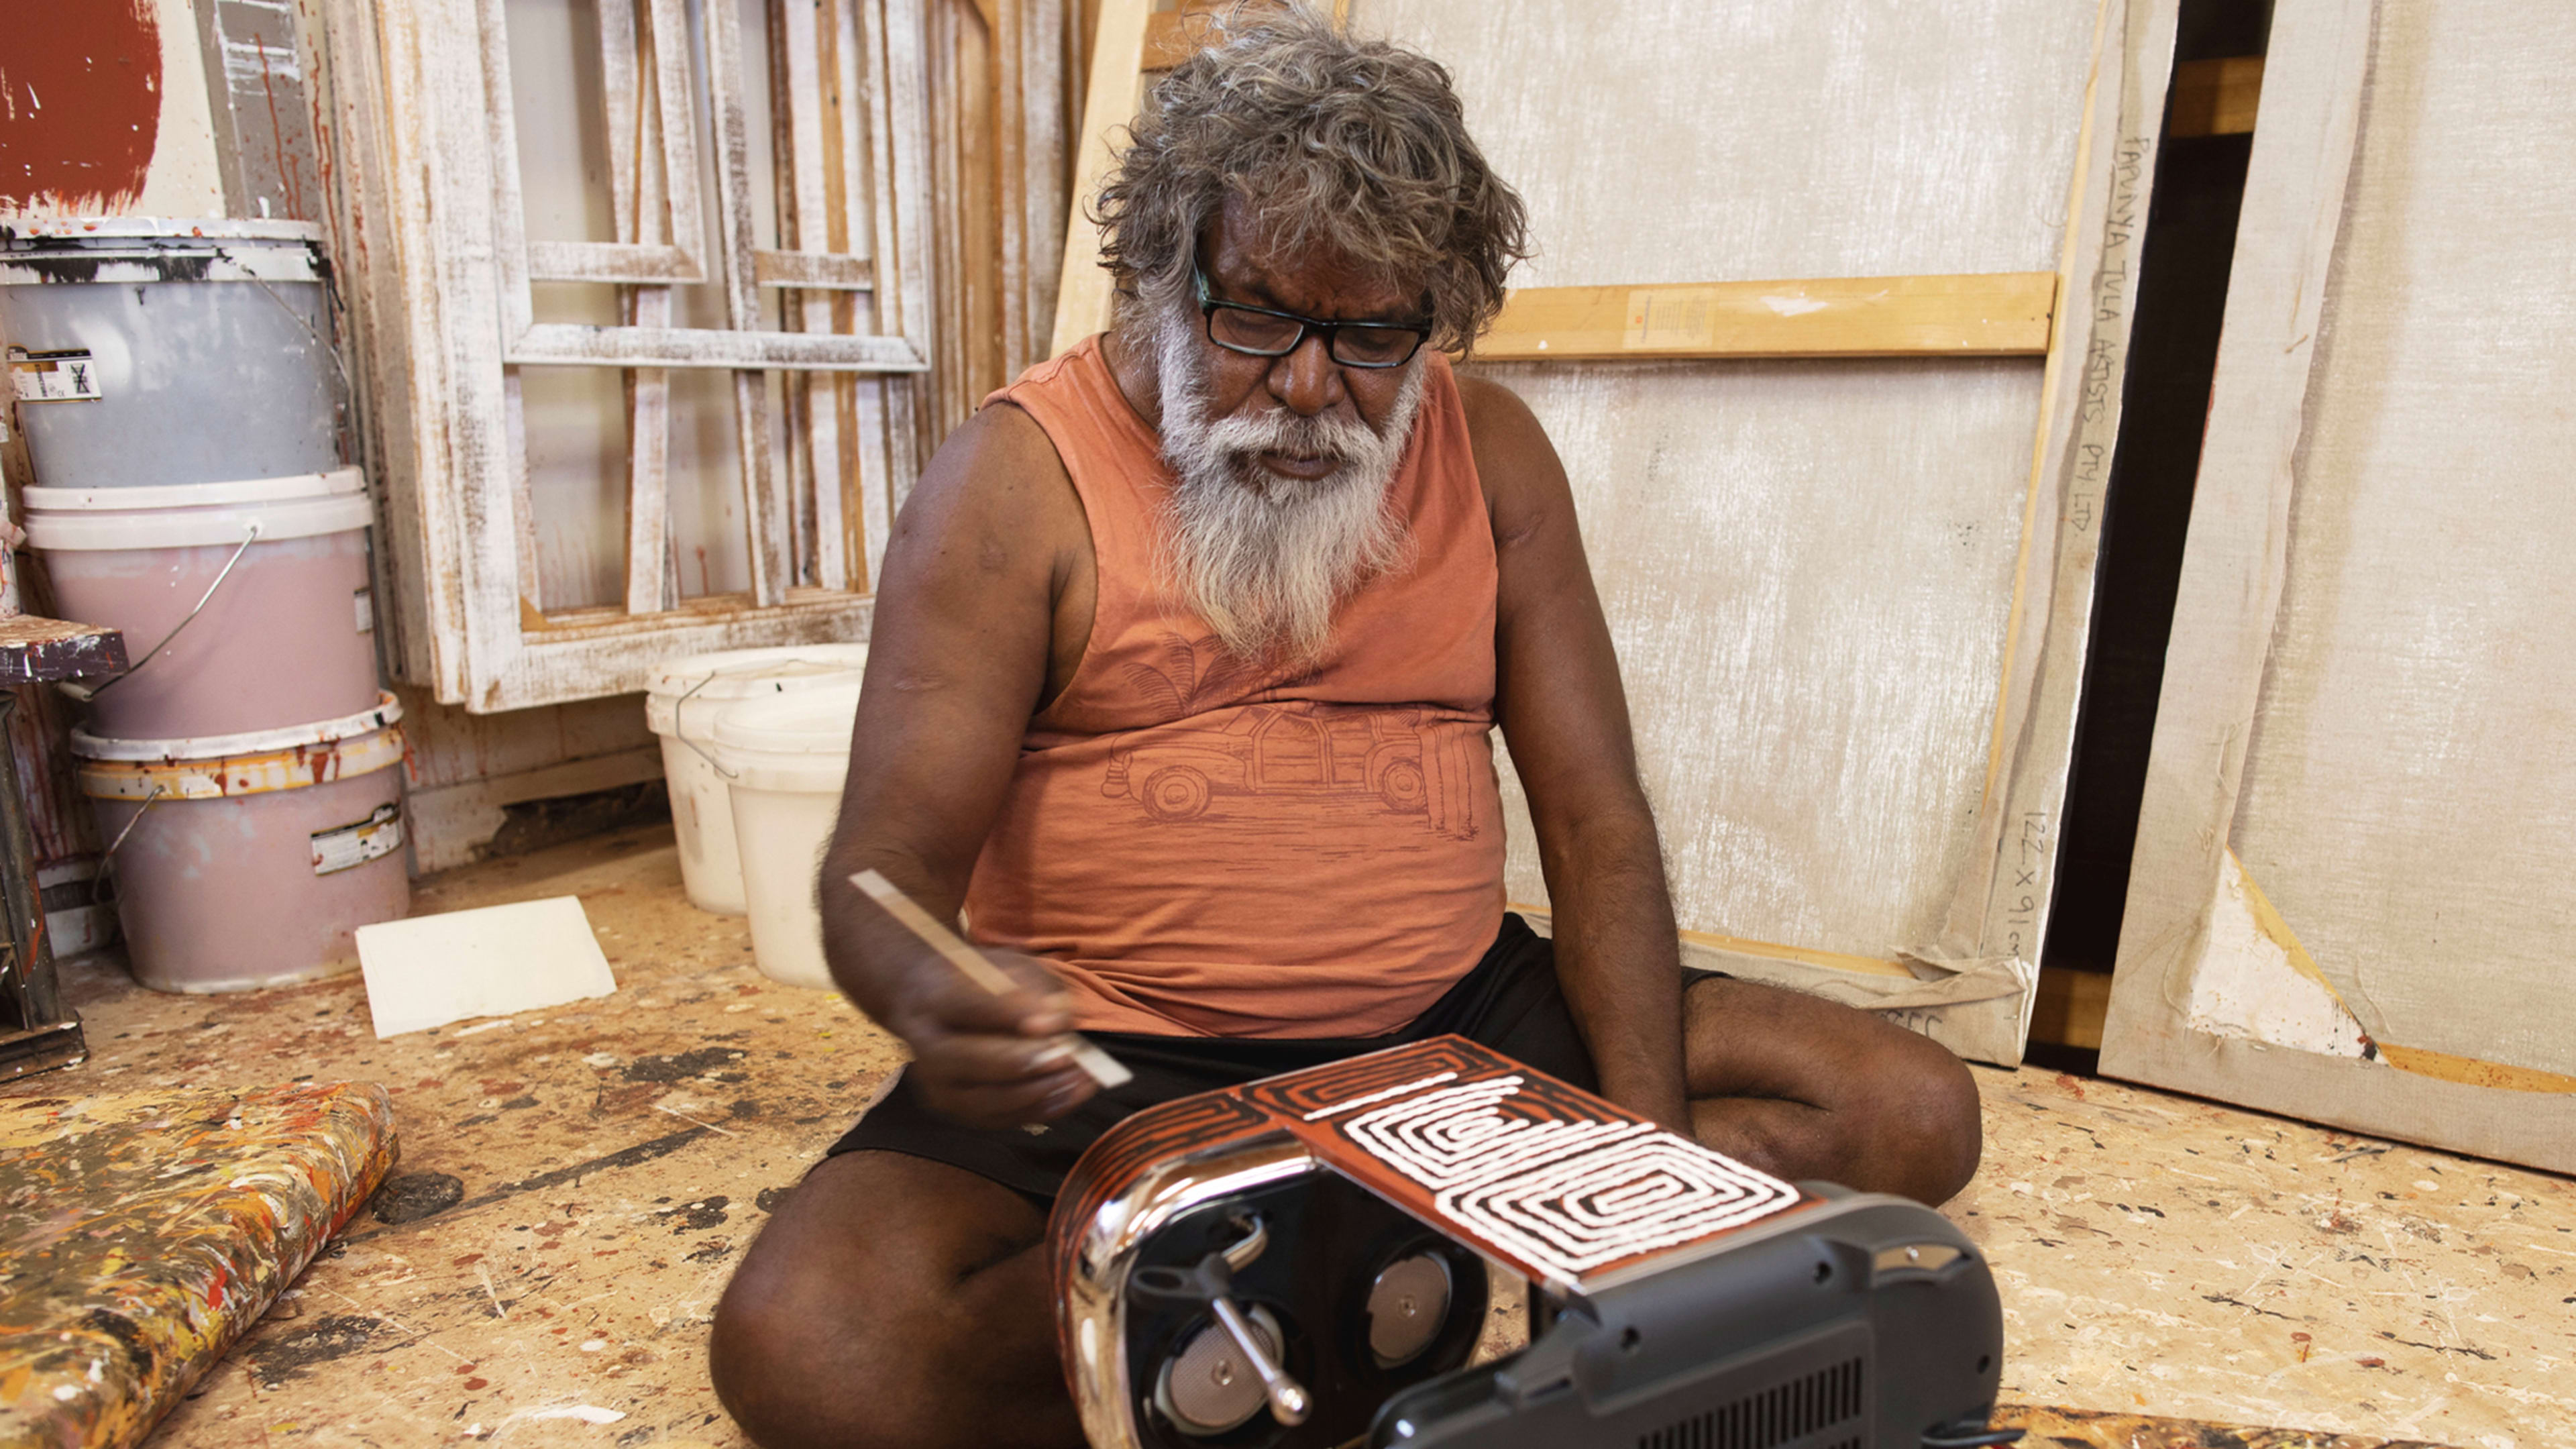 Aboriginal artists designed Breville’s stunning new appliances